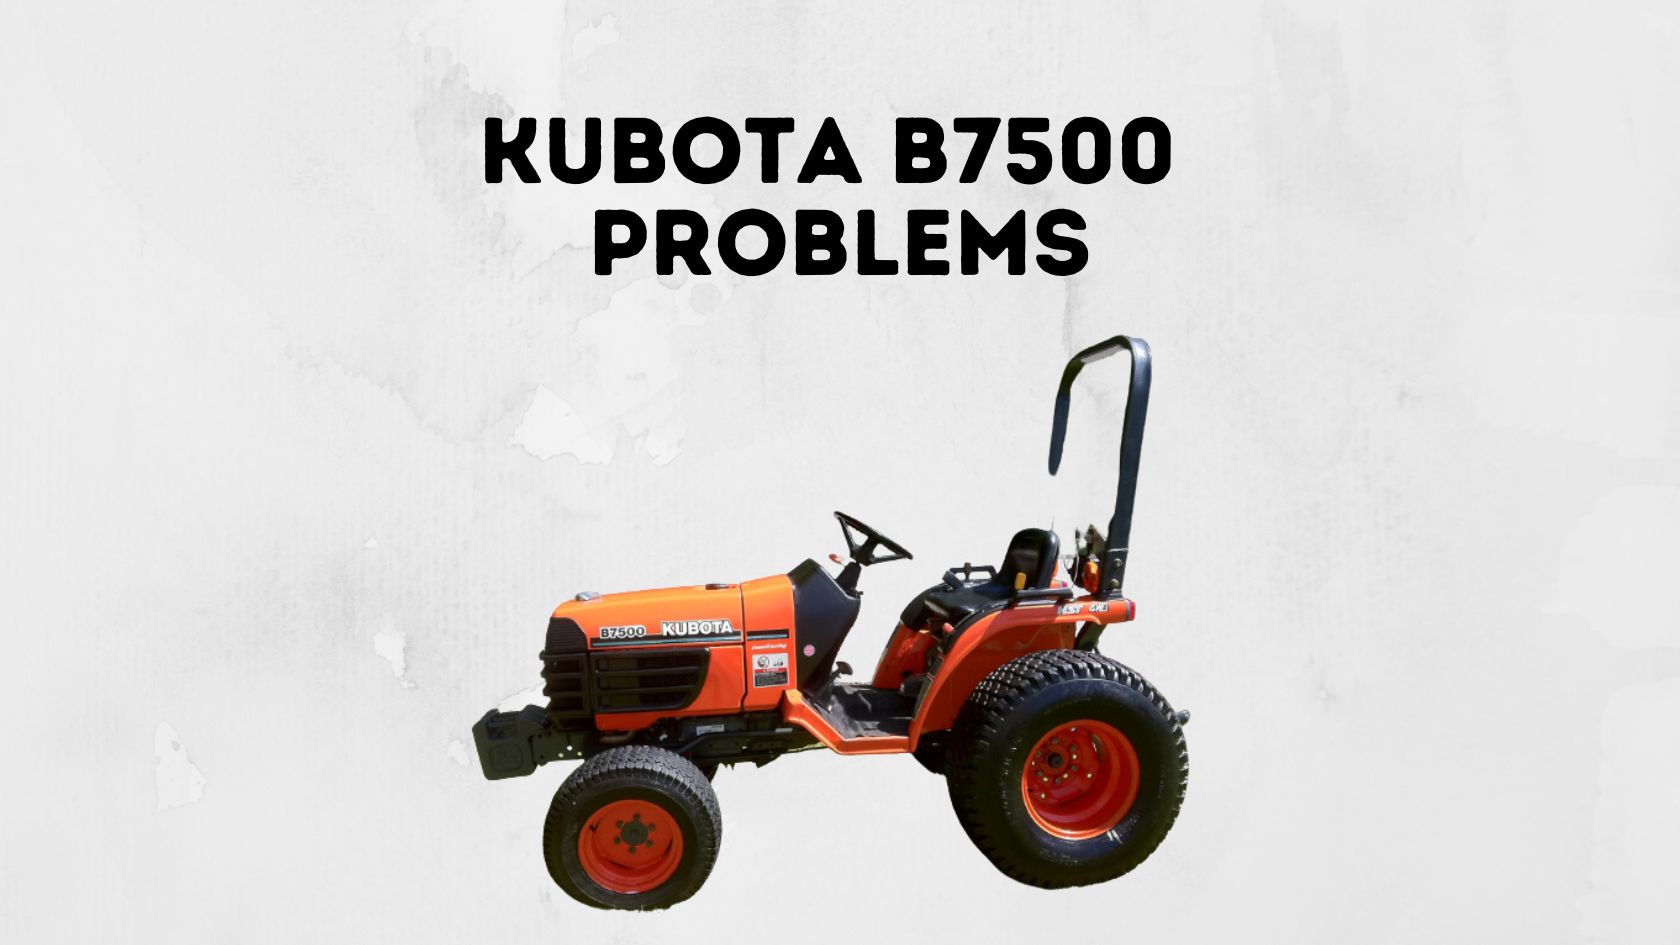 Kubota B7500 Problems